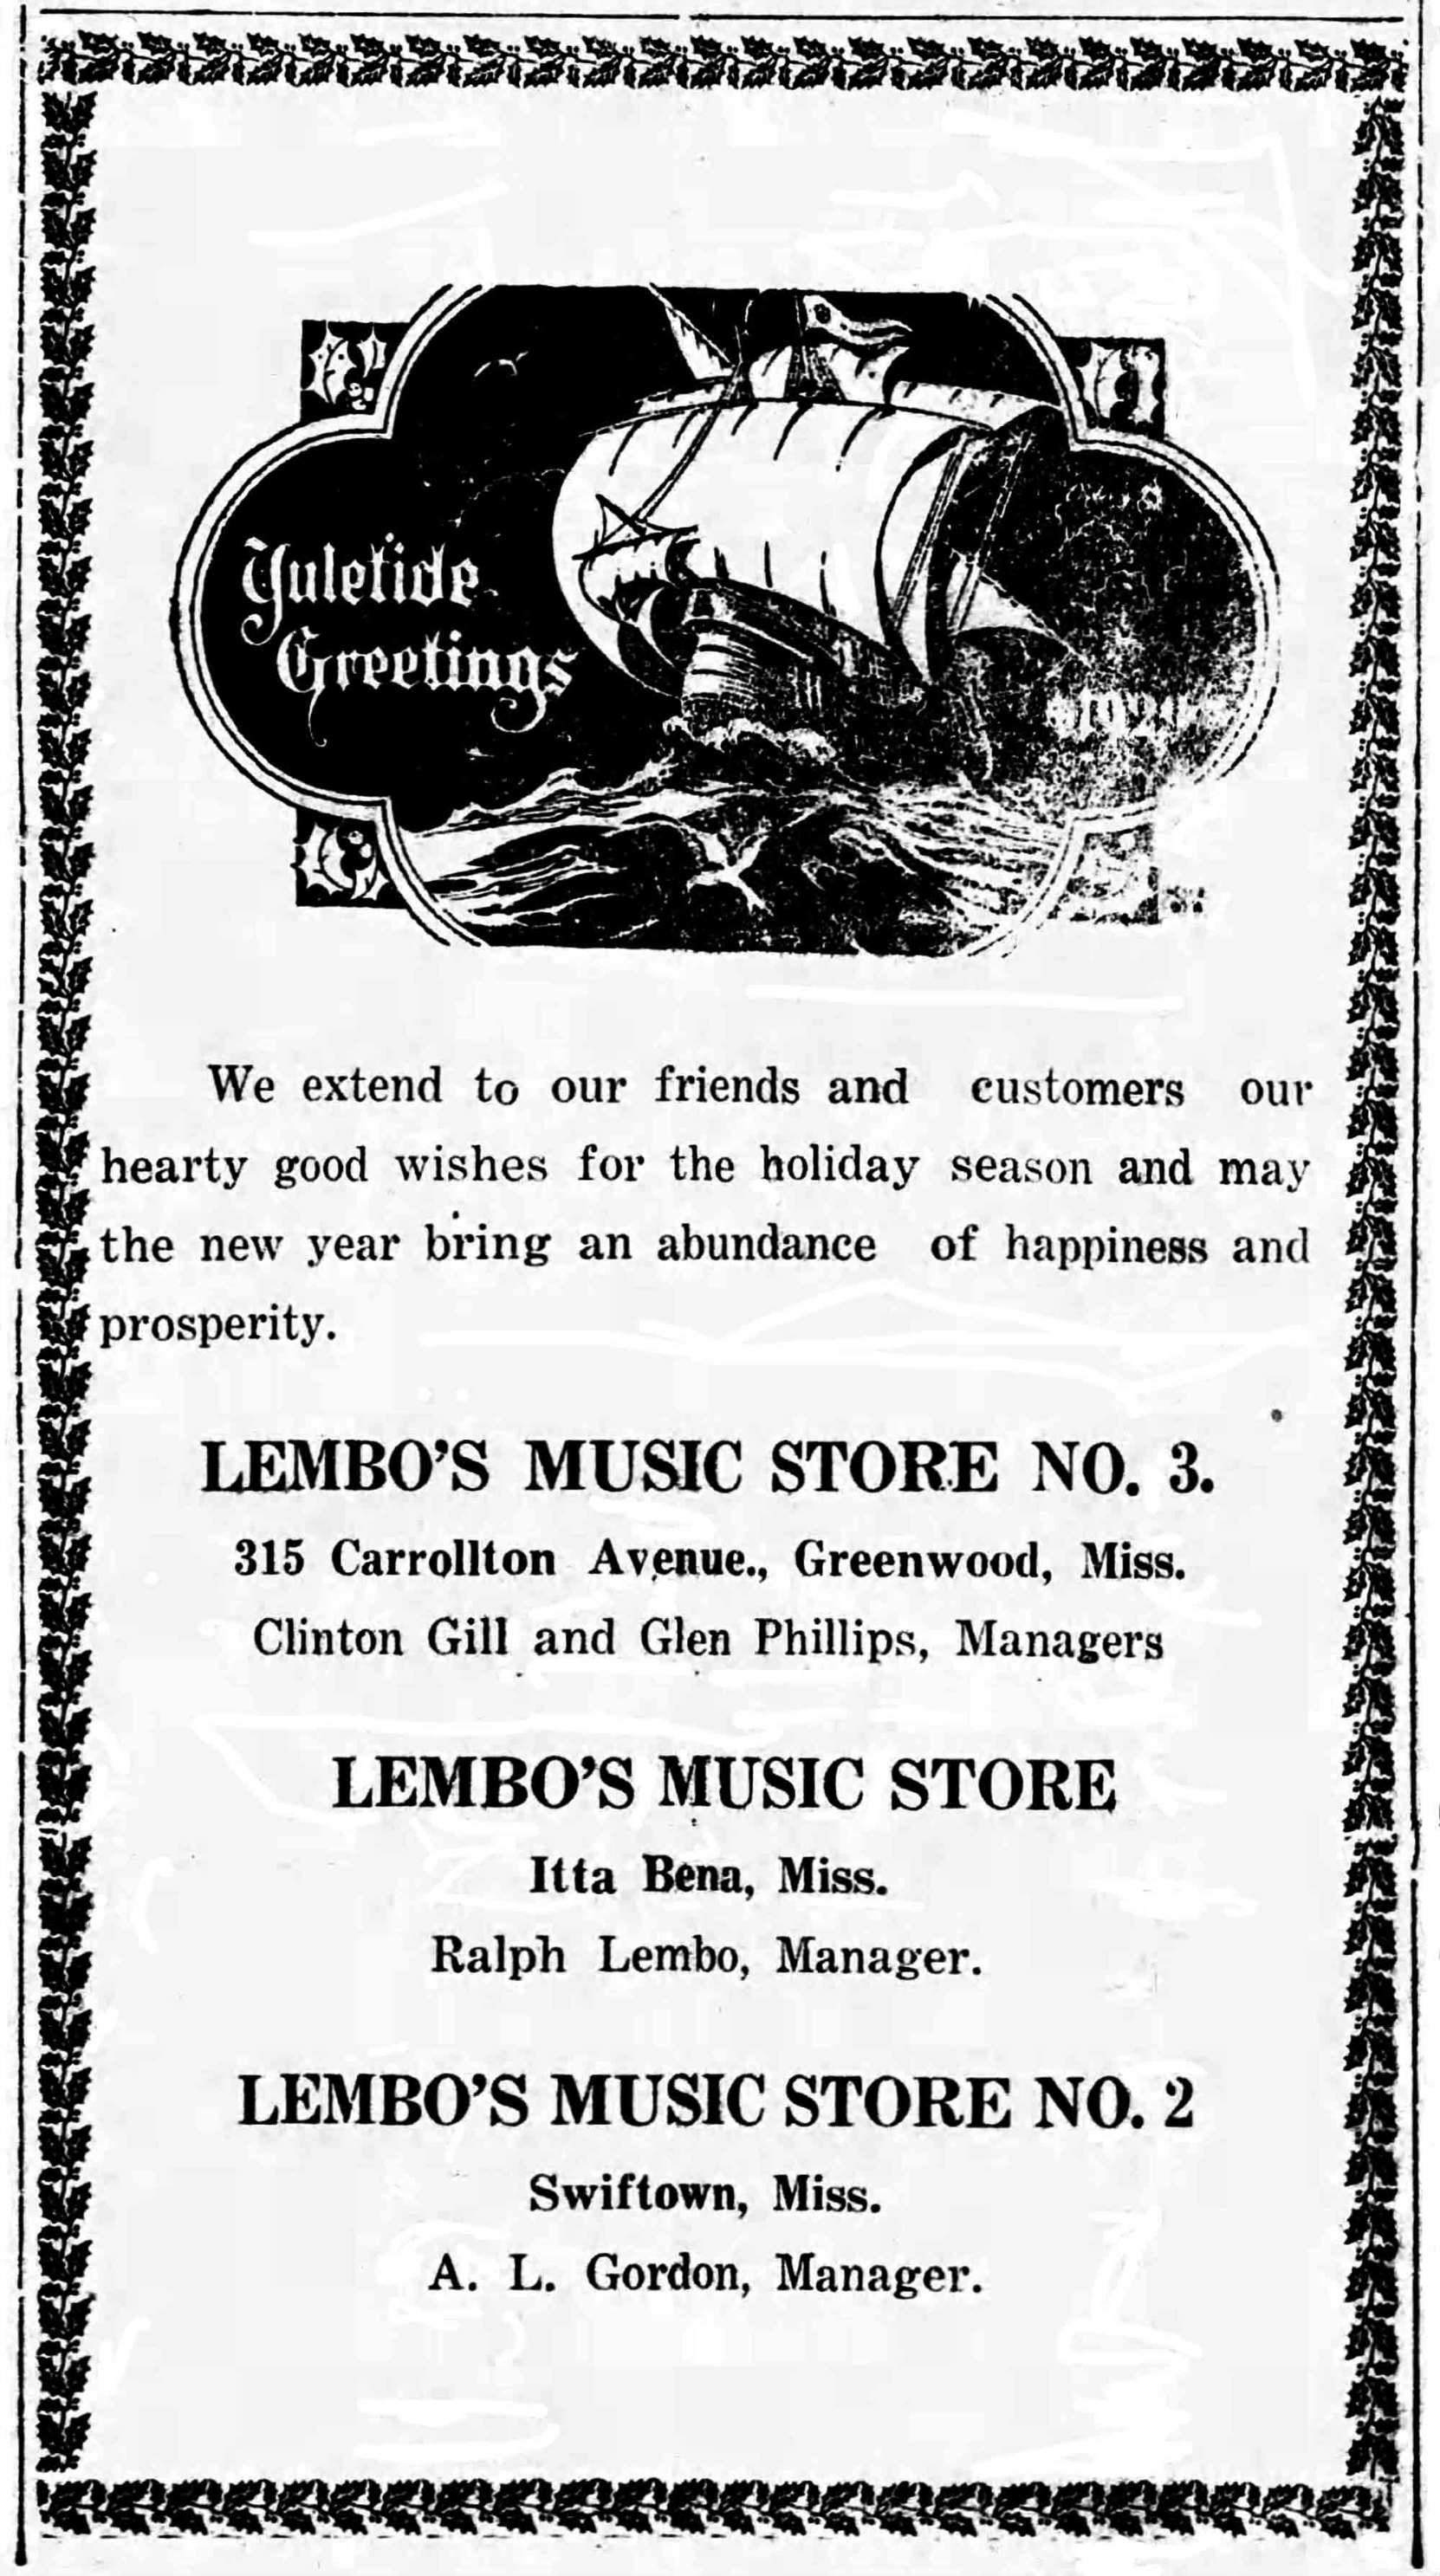 Ralph Lembo Music Store advertisement in Greenwood Commonwealth, December 1928